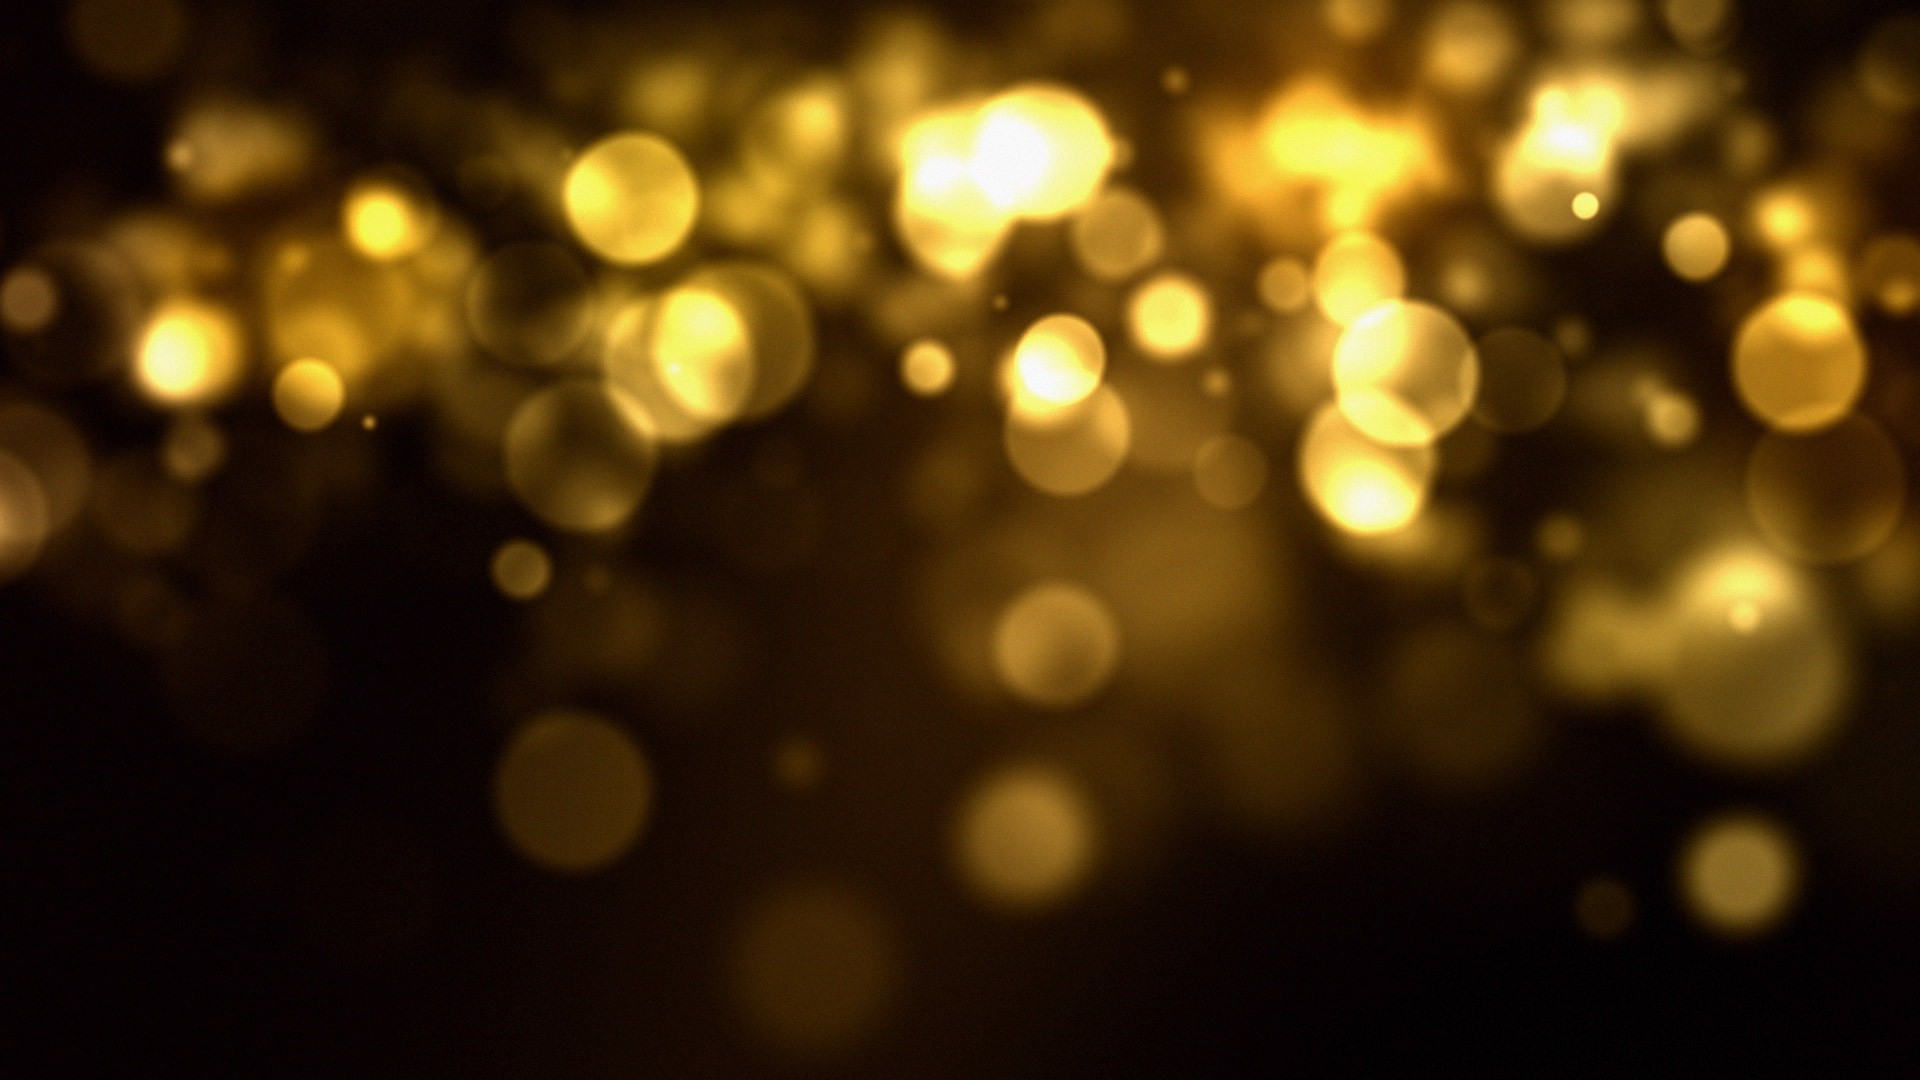 black gold glitter background